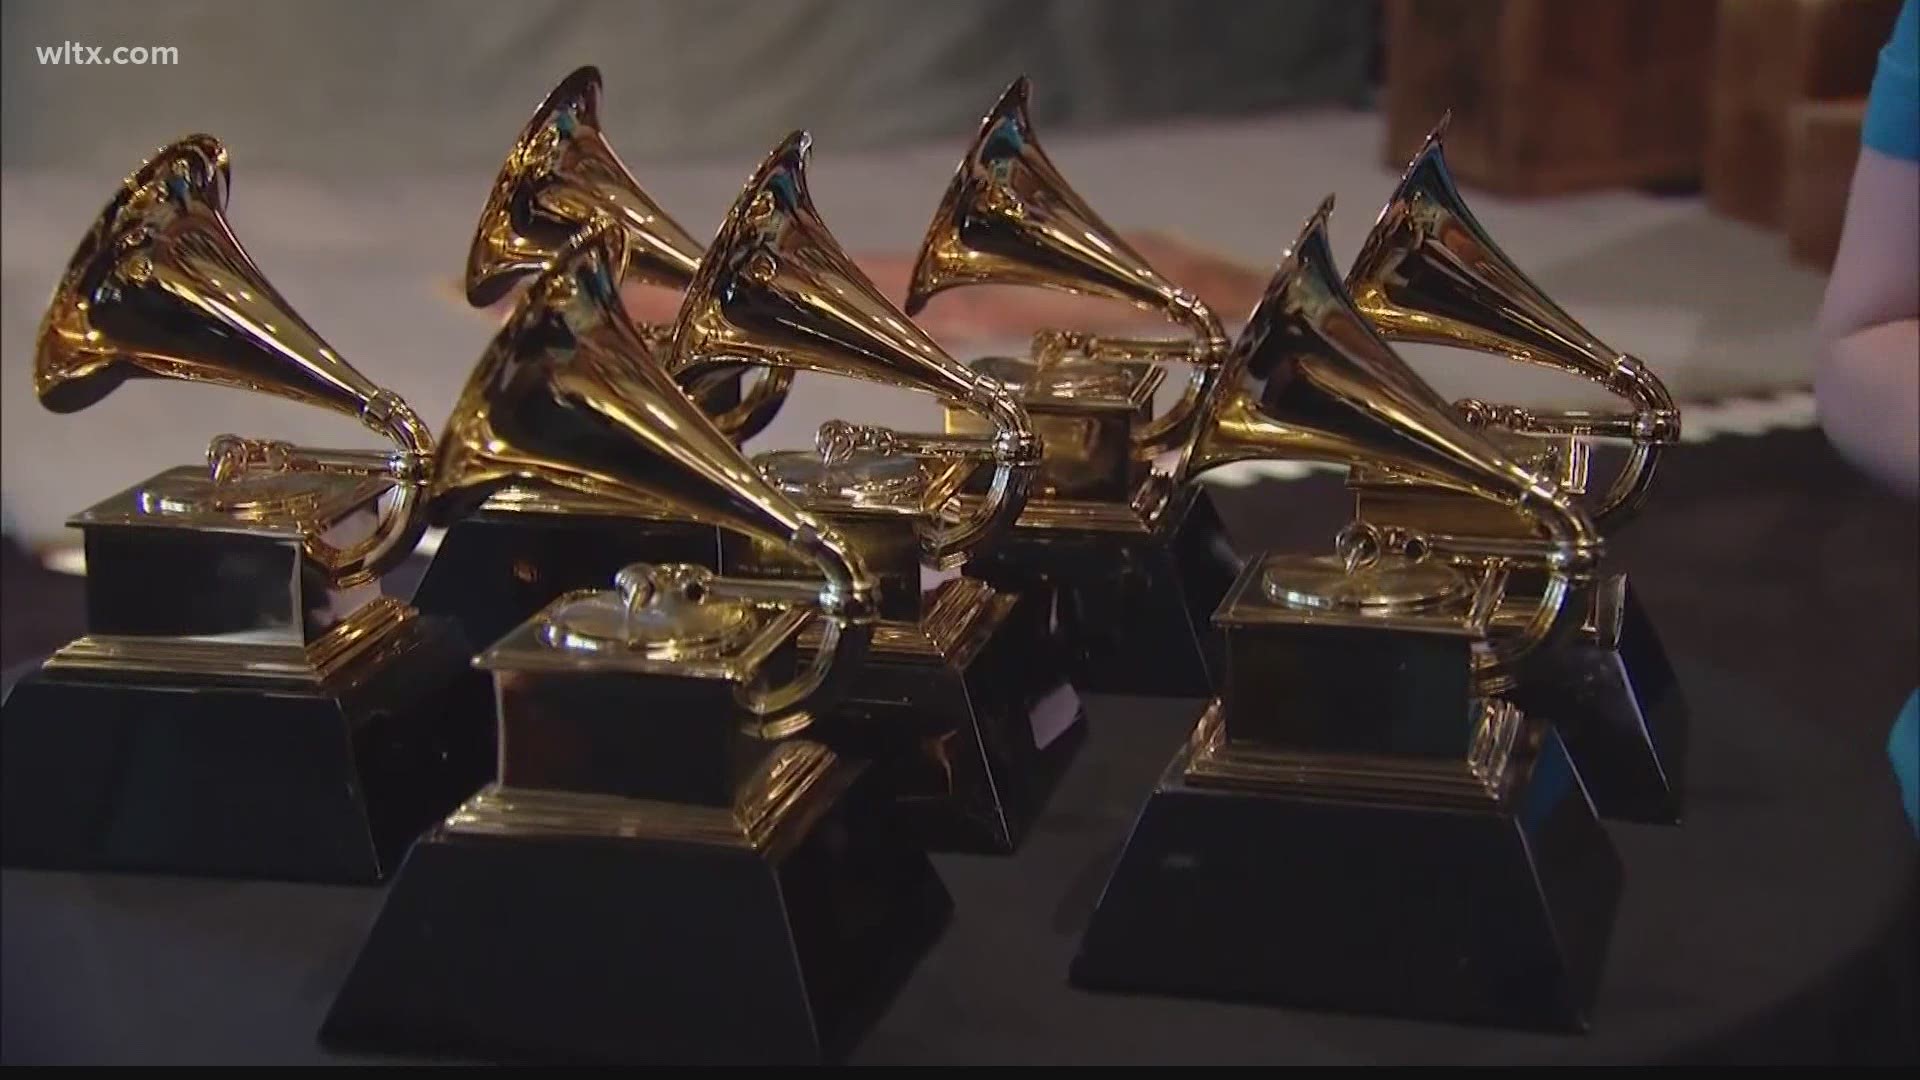 LIST Full 2021 Grammy Award nominees, winners | wtsp.com